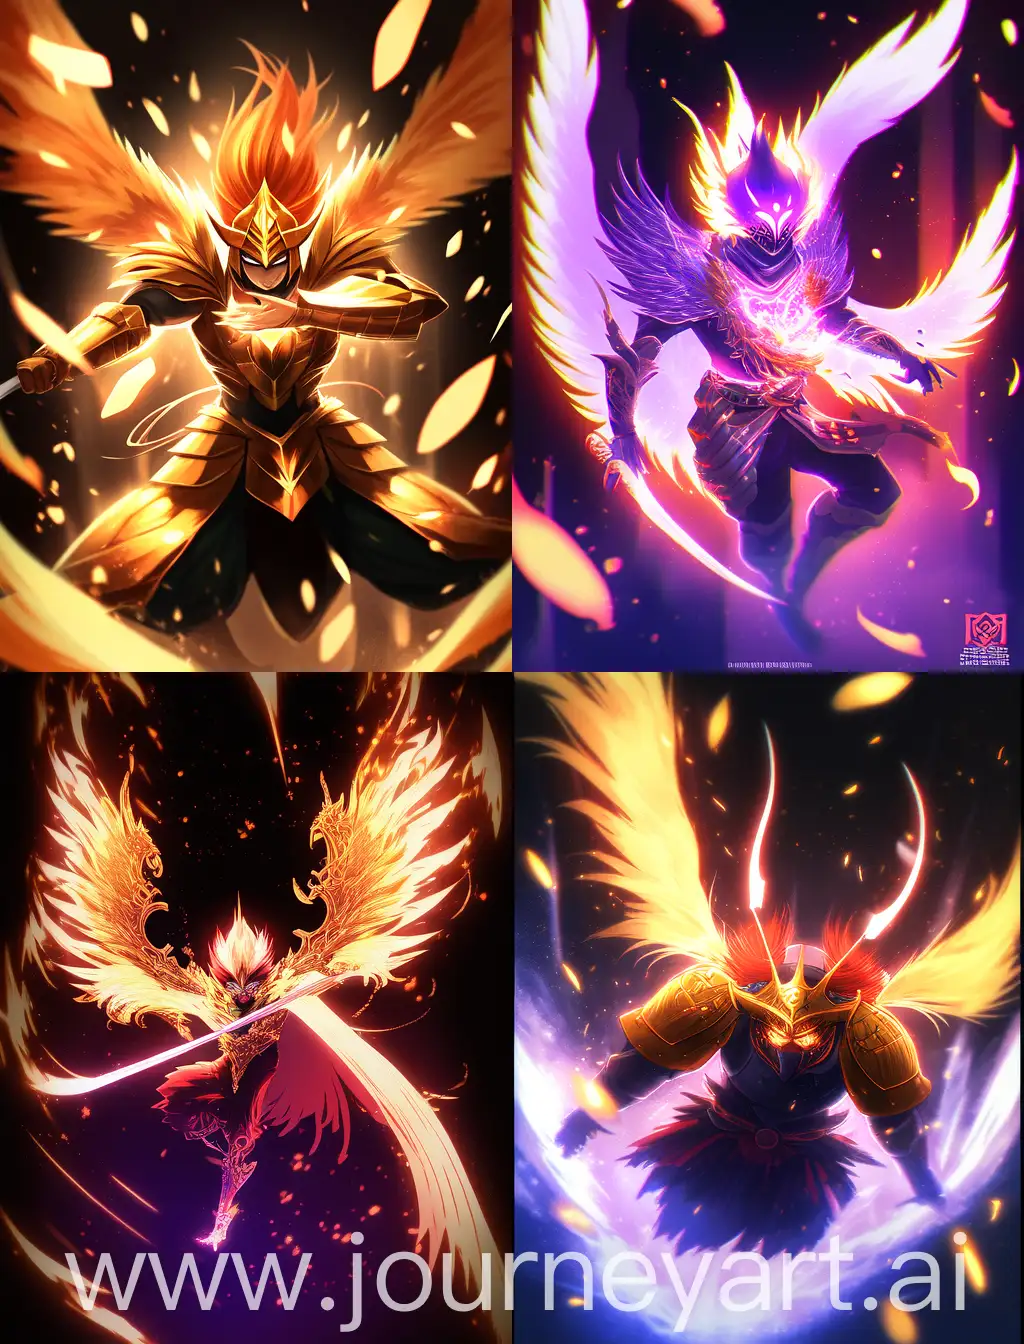 Phoenix-Warrior-Emerges-with-Cinematic-Lighting